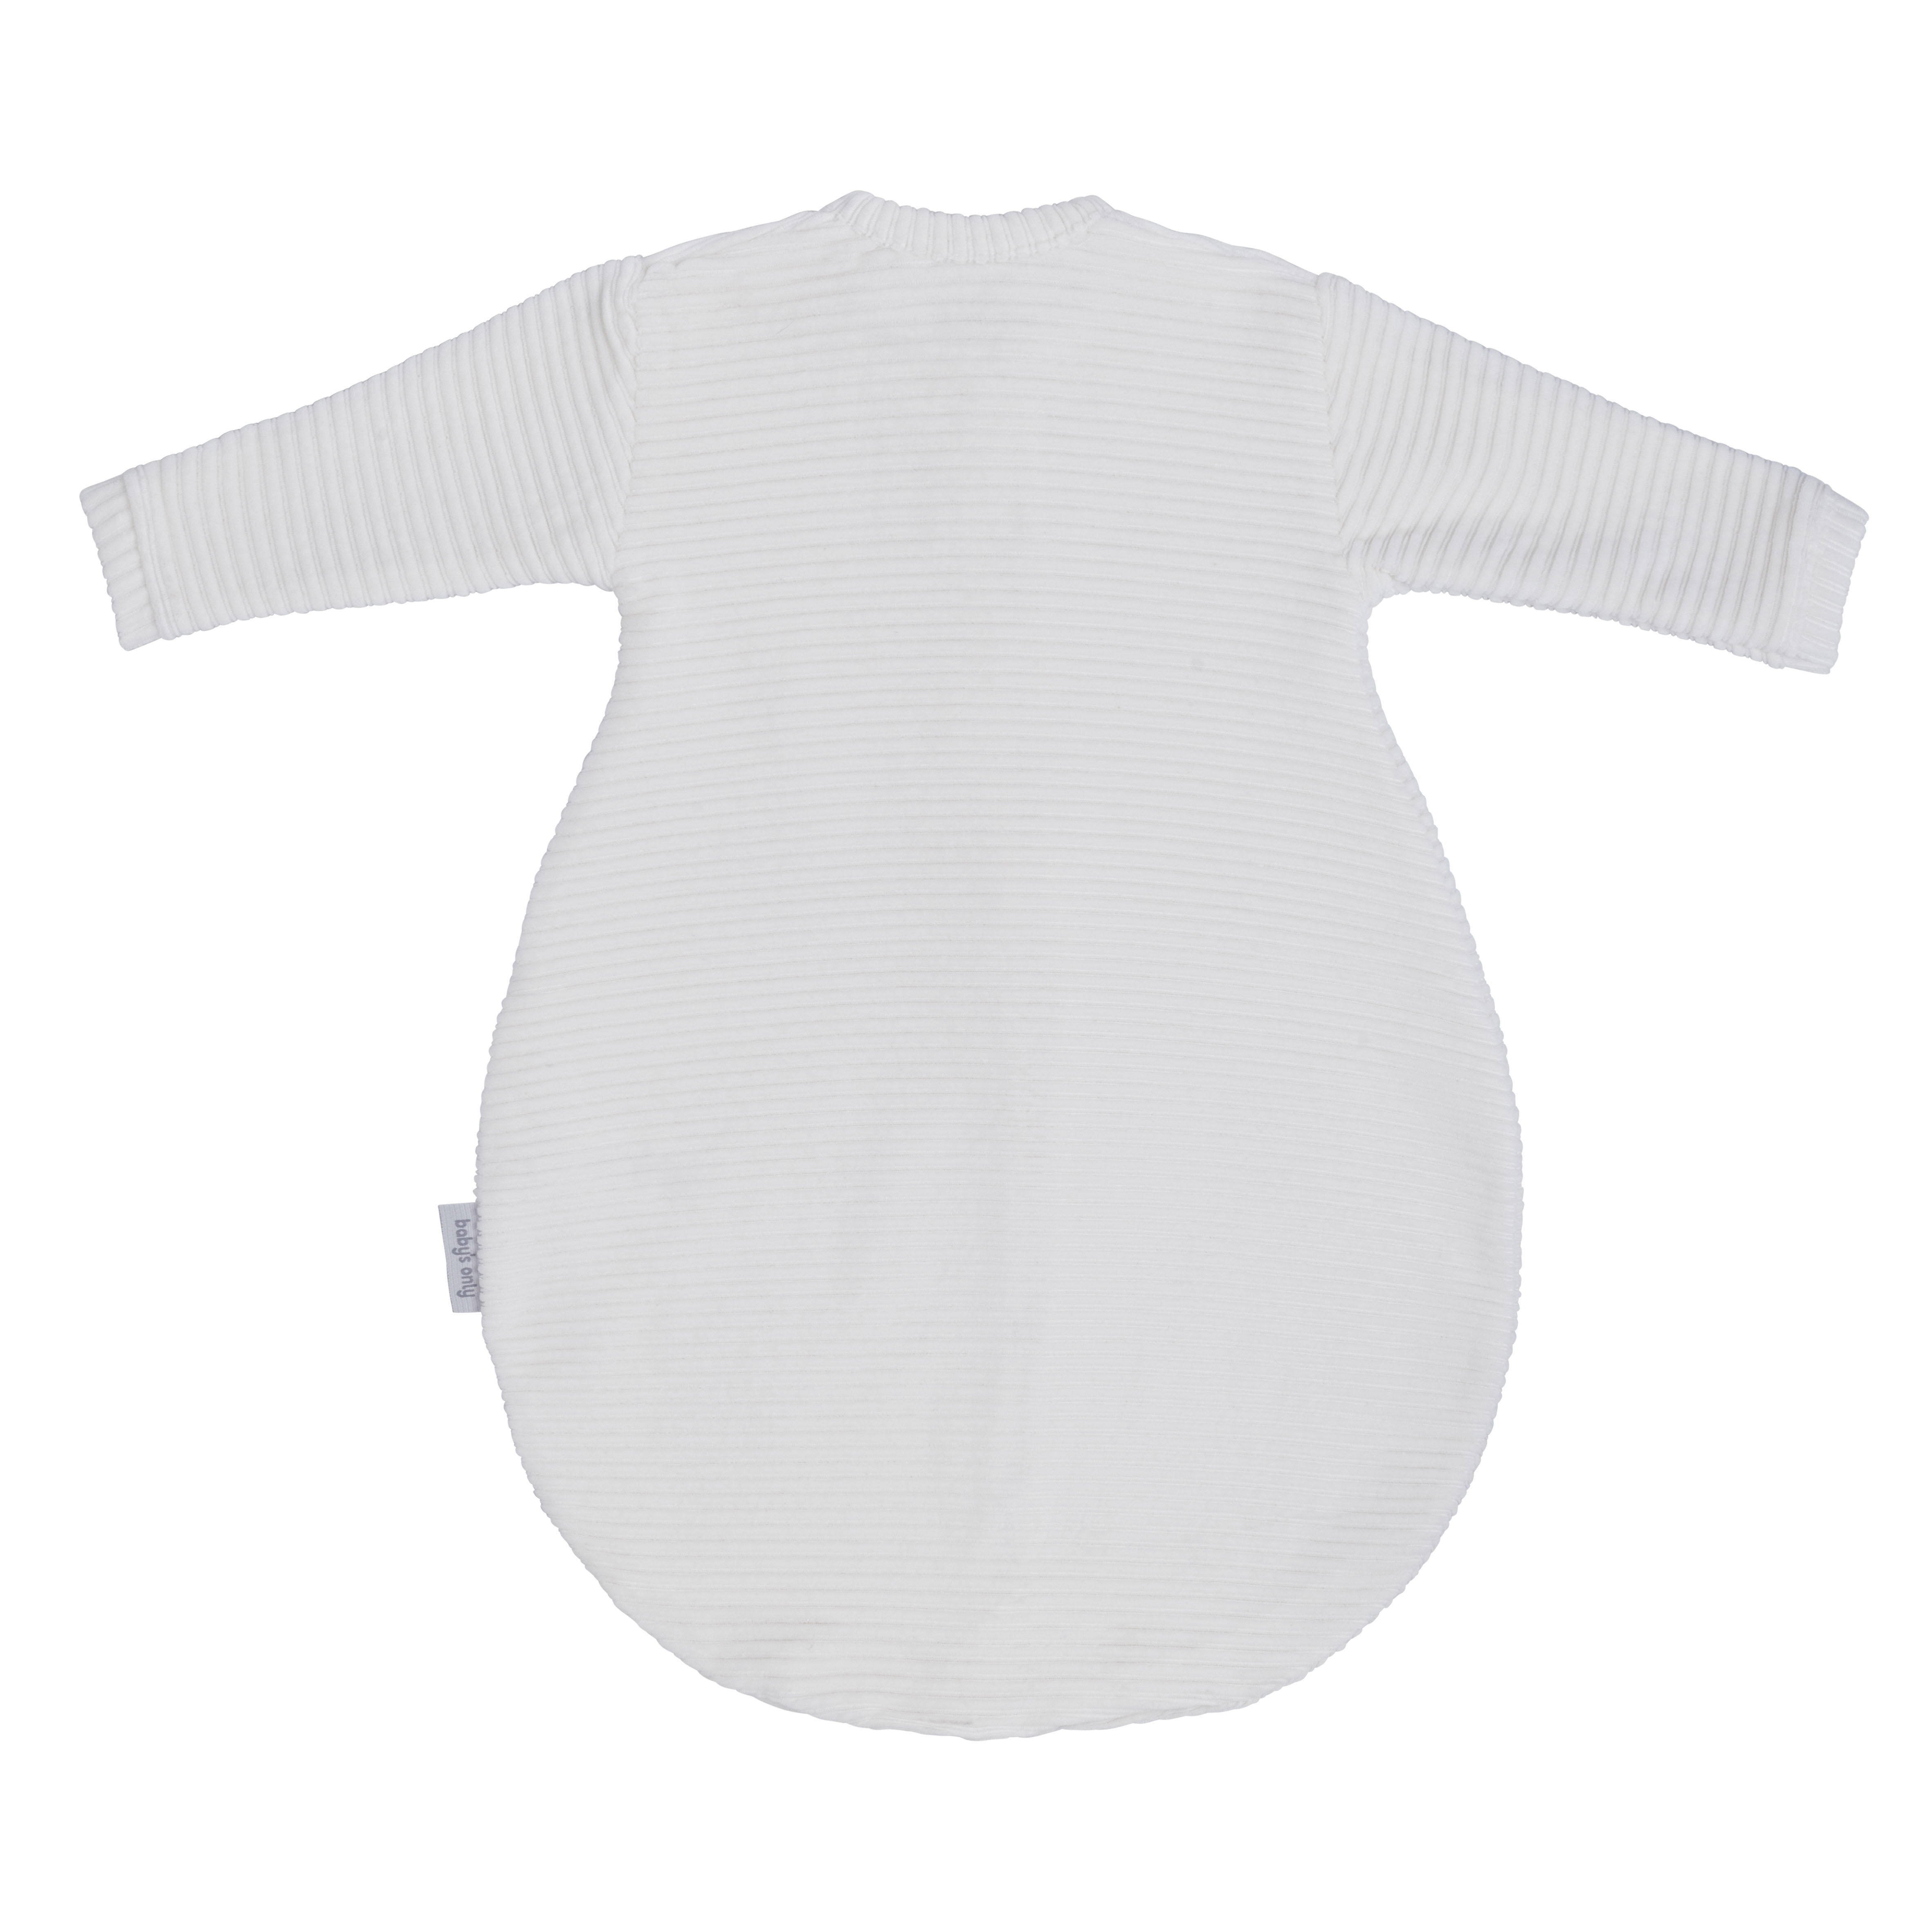 Sleeping bag long sleeves Sense white - 60 cm